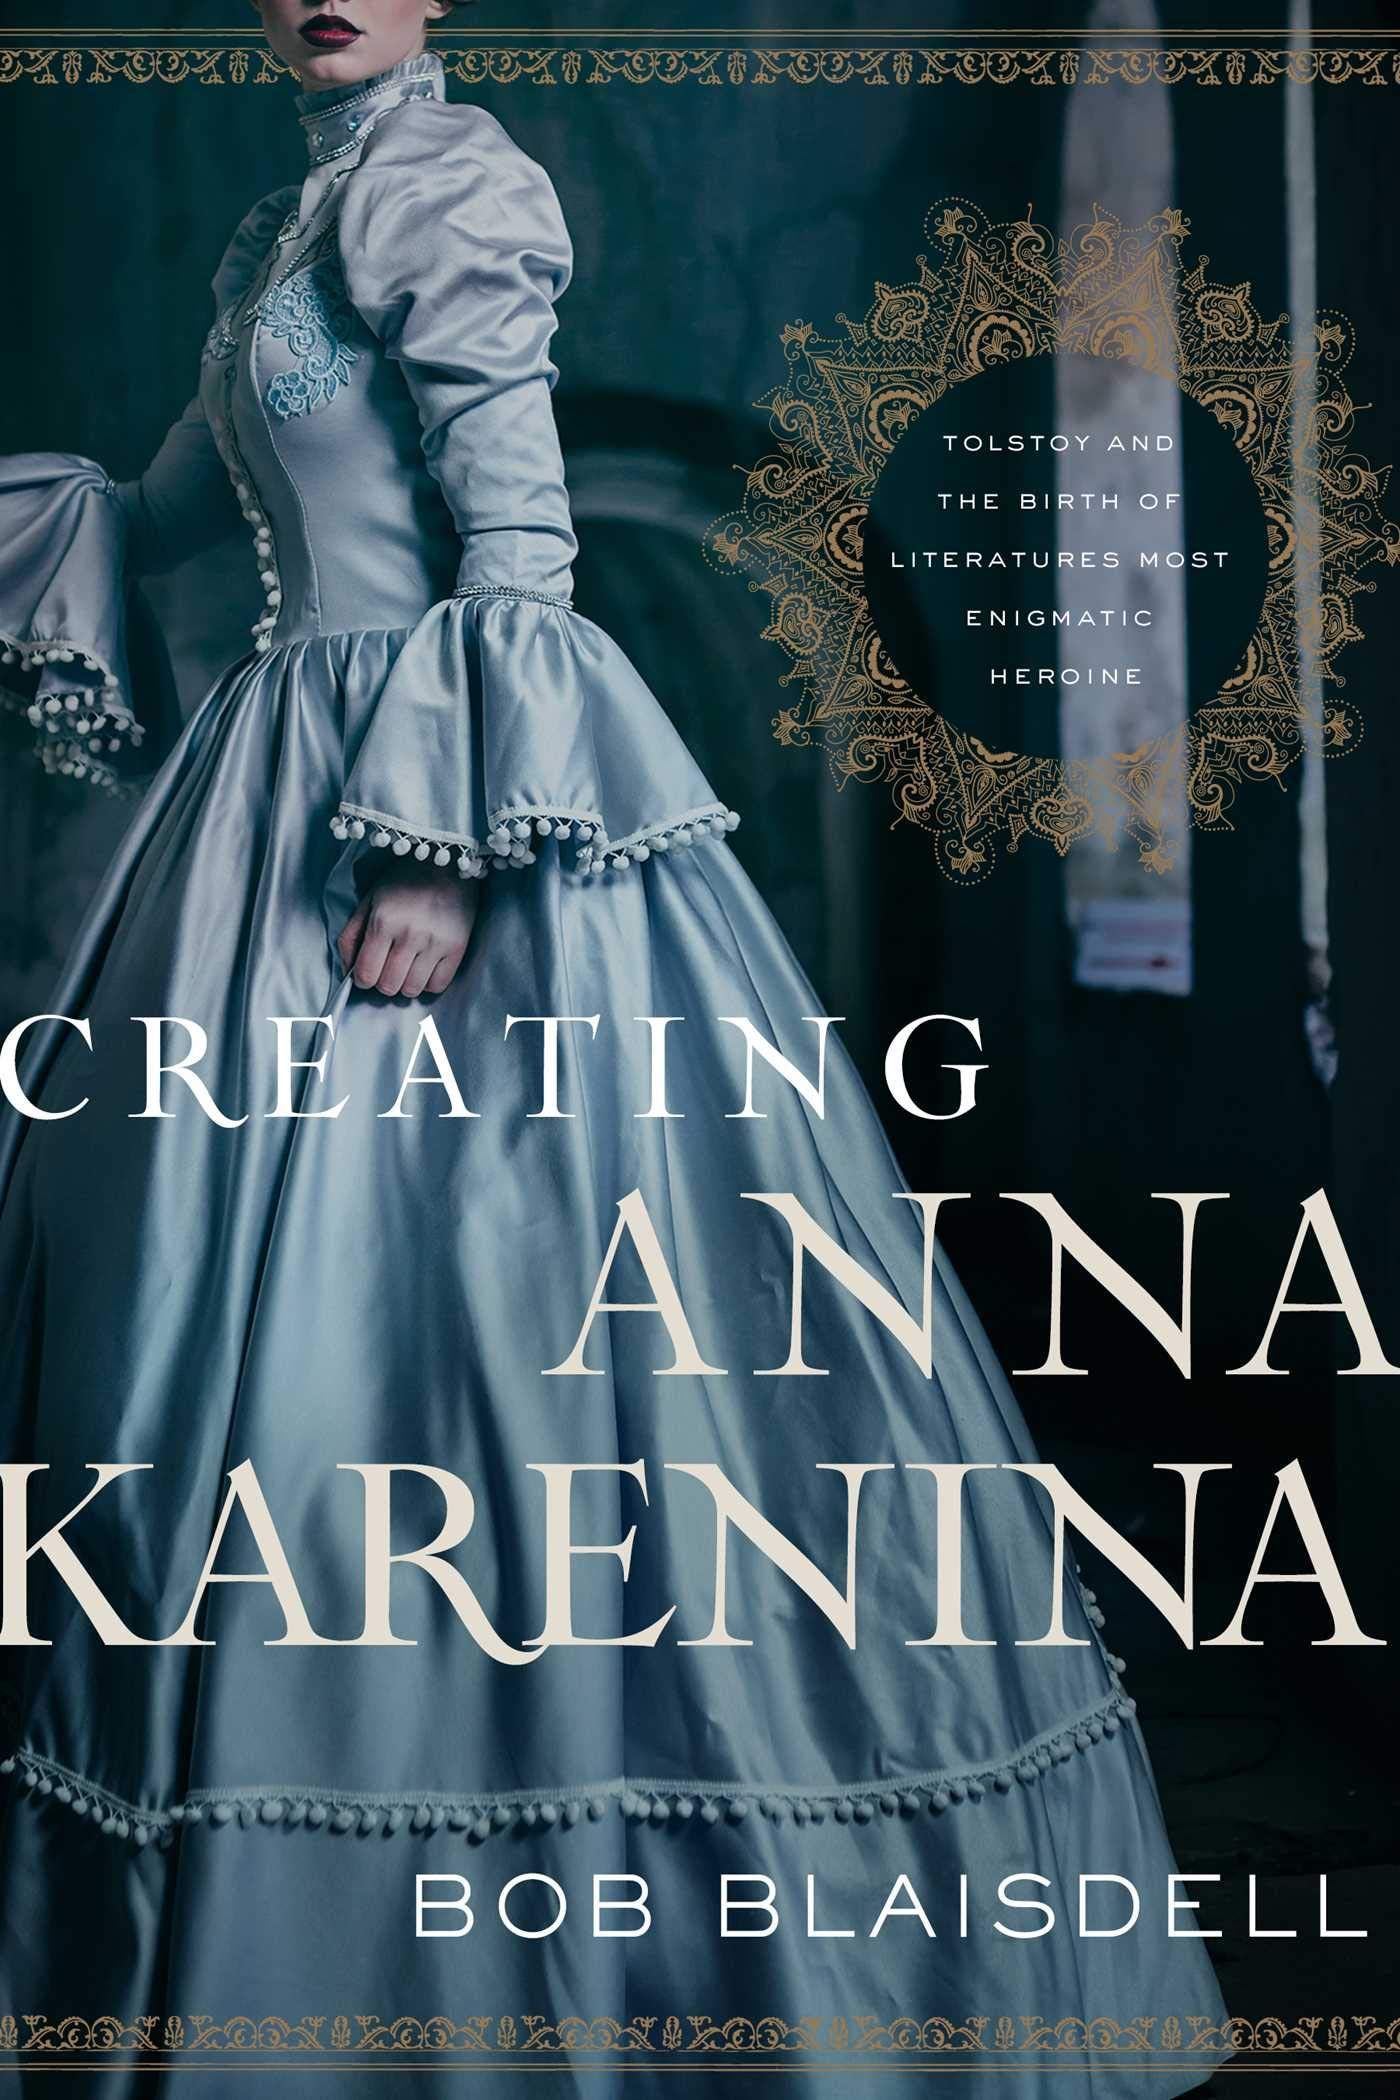 Between Irritation and Oyster: On Bob Blaisdell’s “Creating Anna Karenina”